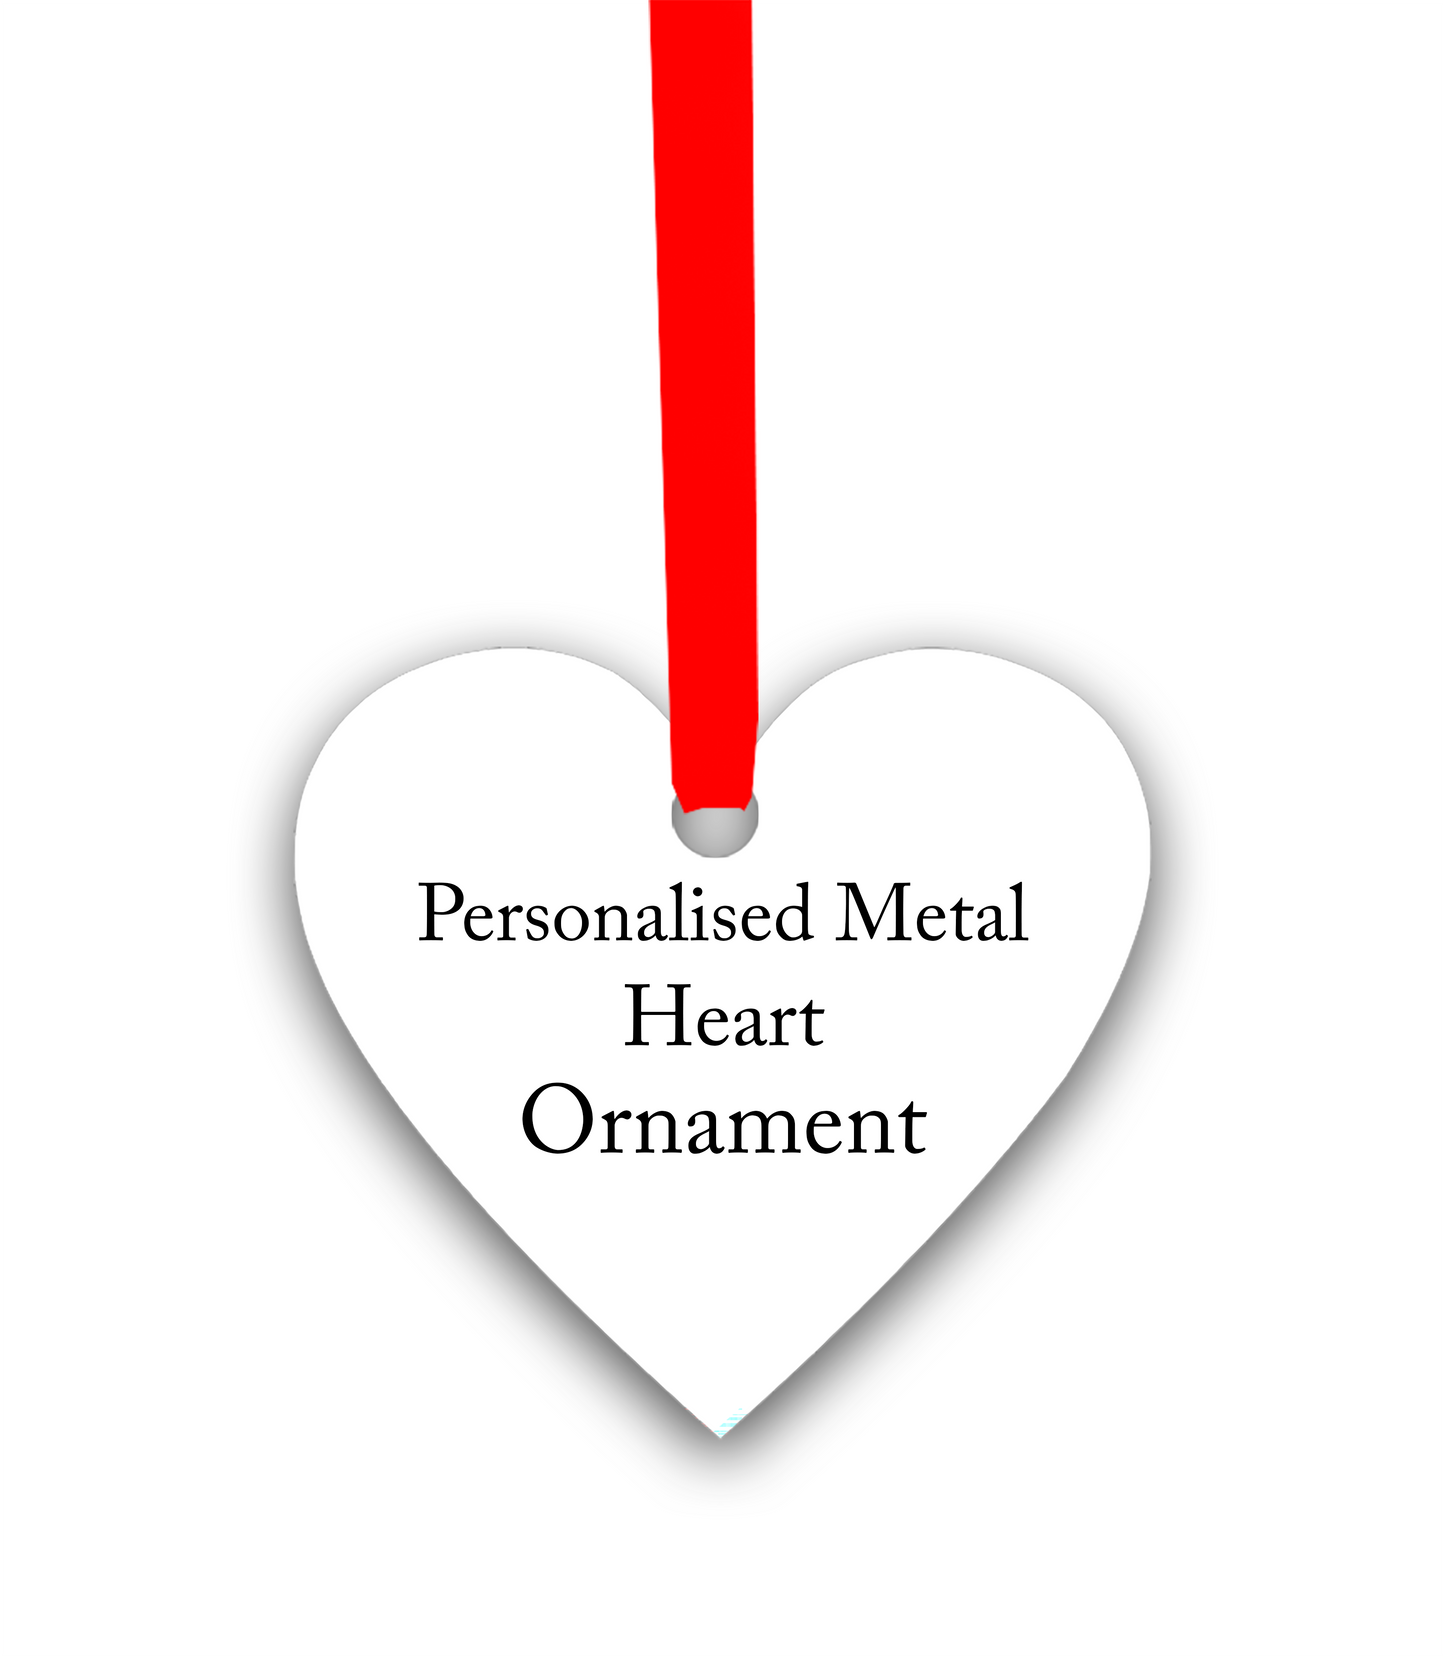 Personalised metal heart ornament